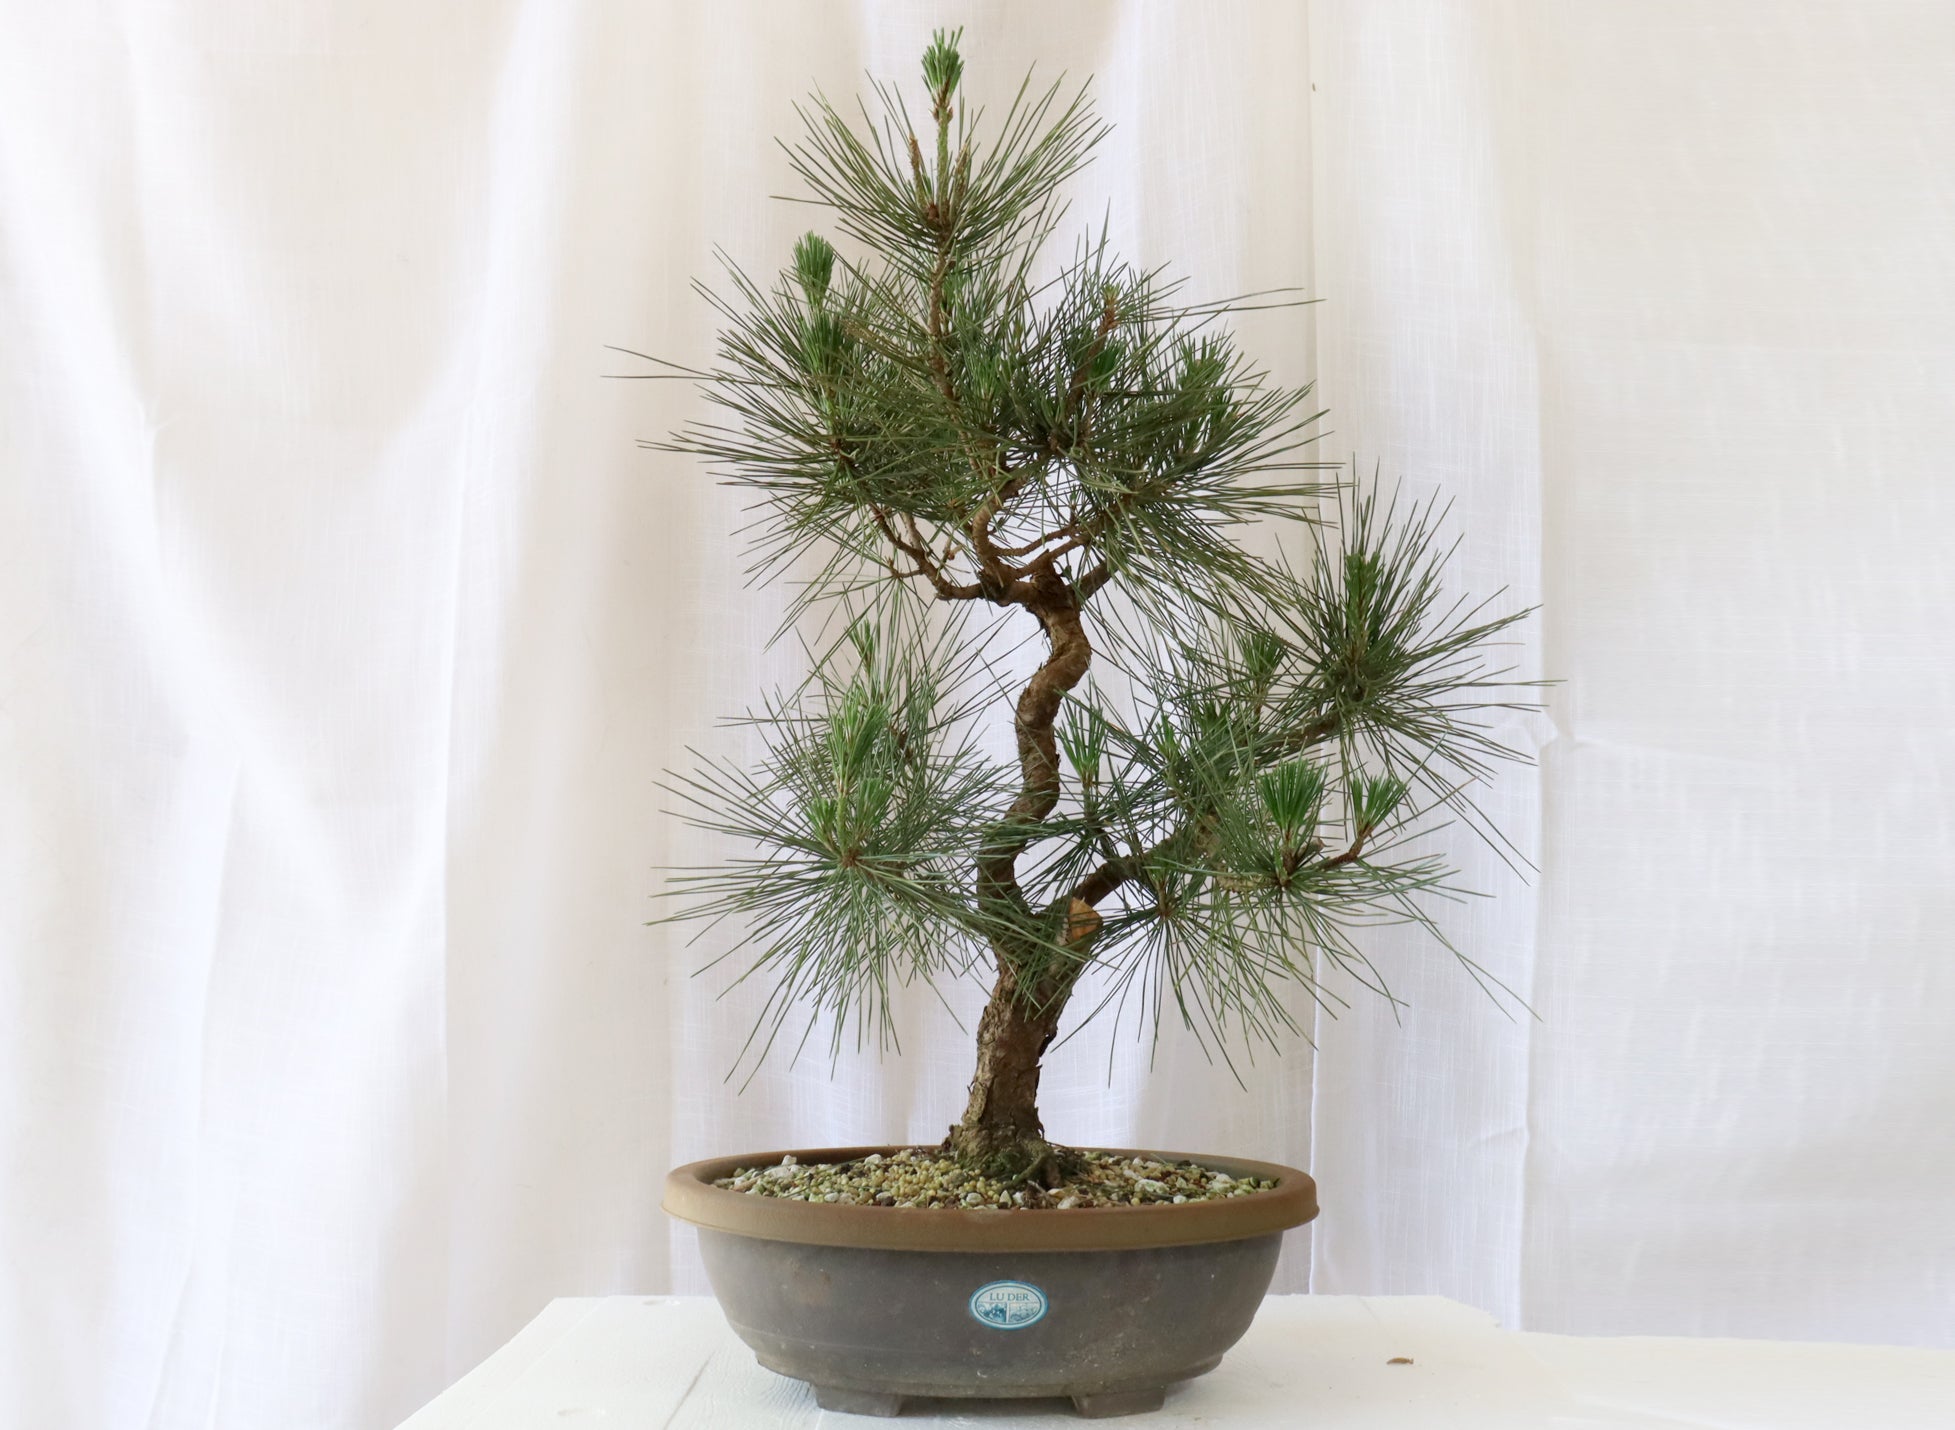 Japanese Black Pine Pre-Bonsai in a 14 Inch Plastic Trainer